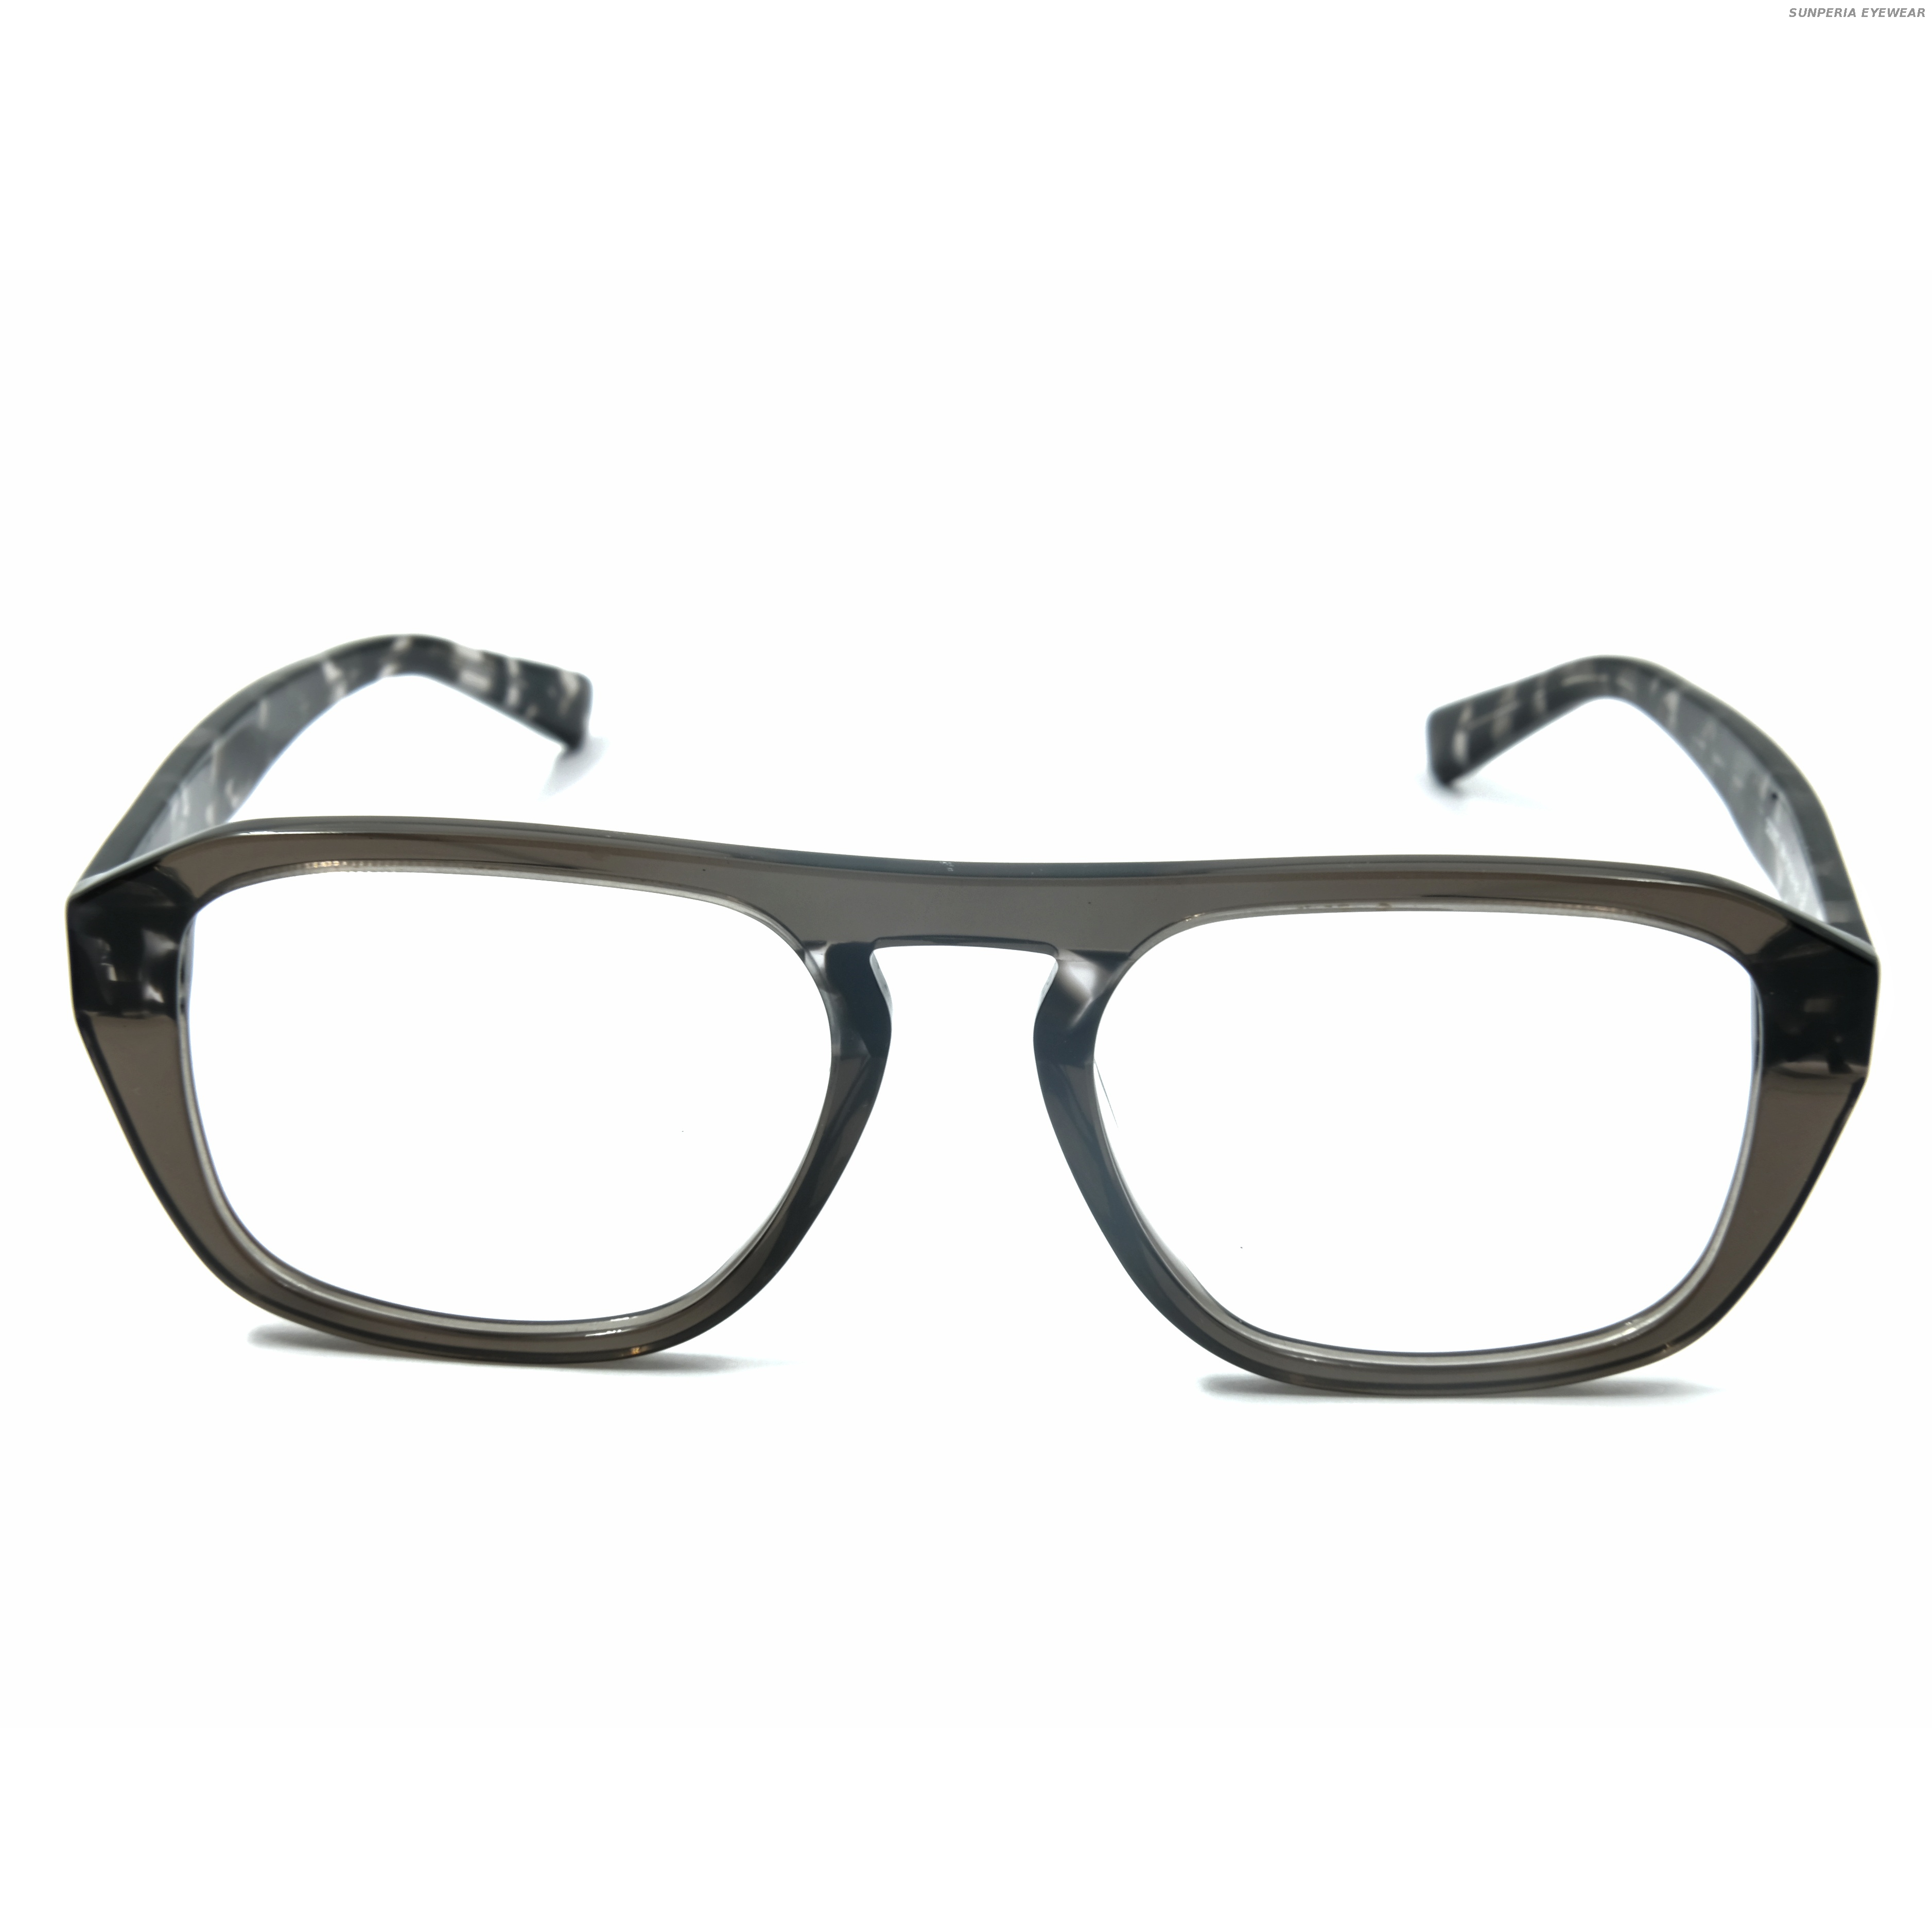 Gafas de acetato gris transparente, marcos ópticos de moda que bloquean las gafas antiluz azul